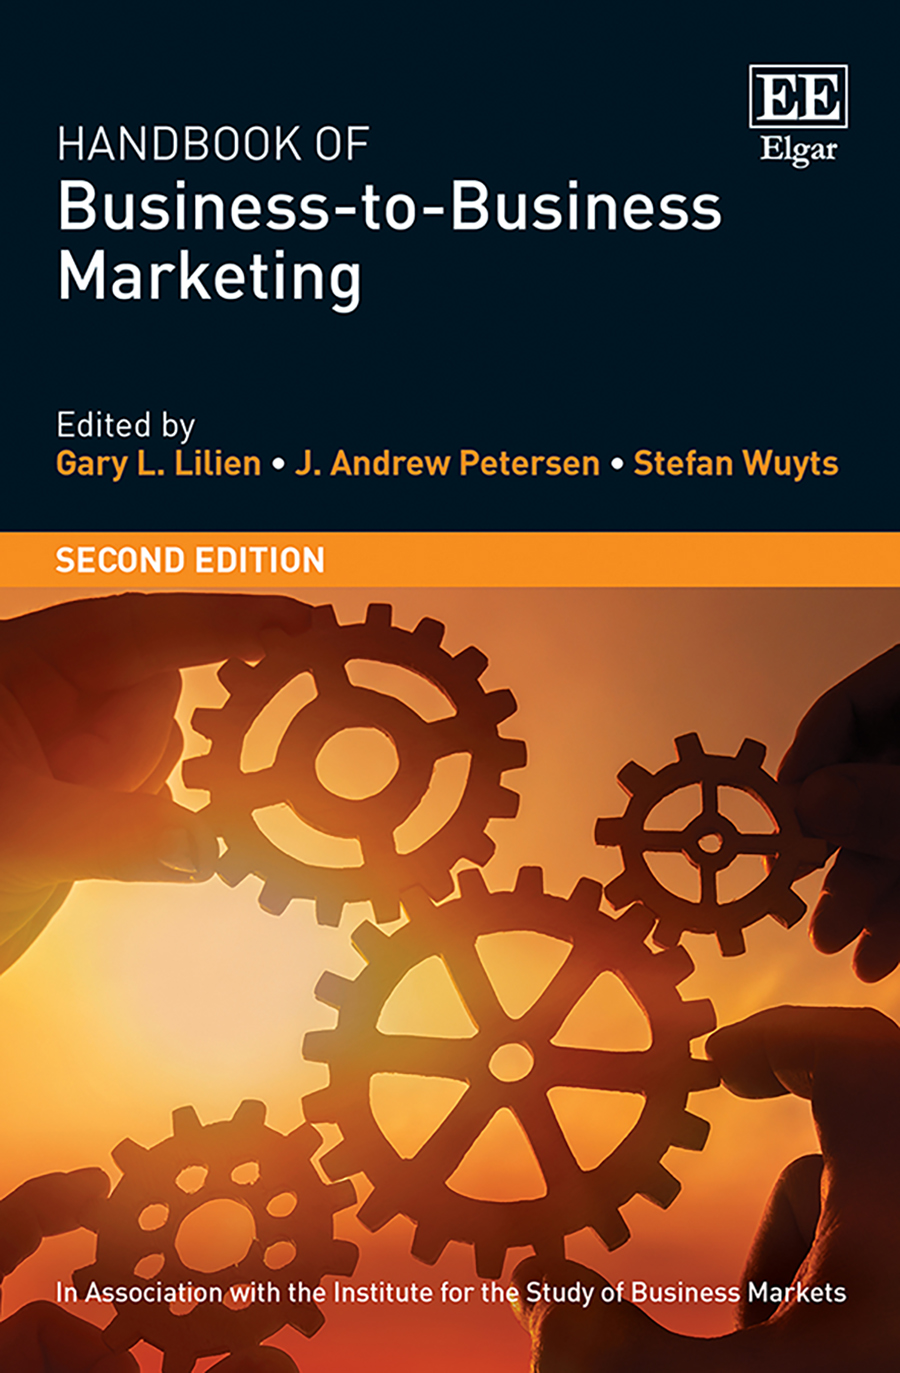 Handbook of Business-to-Business Marketing